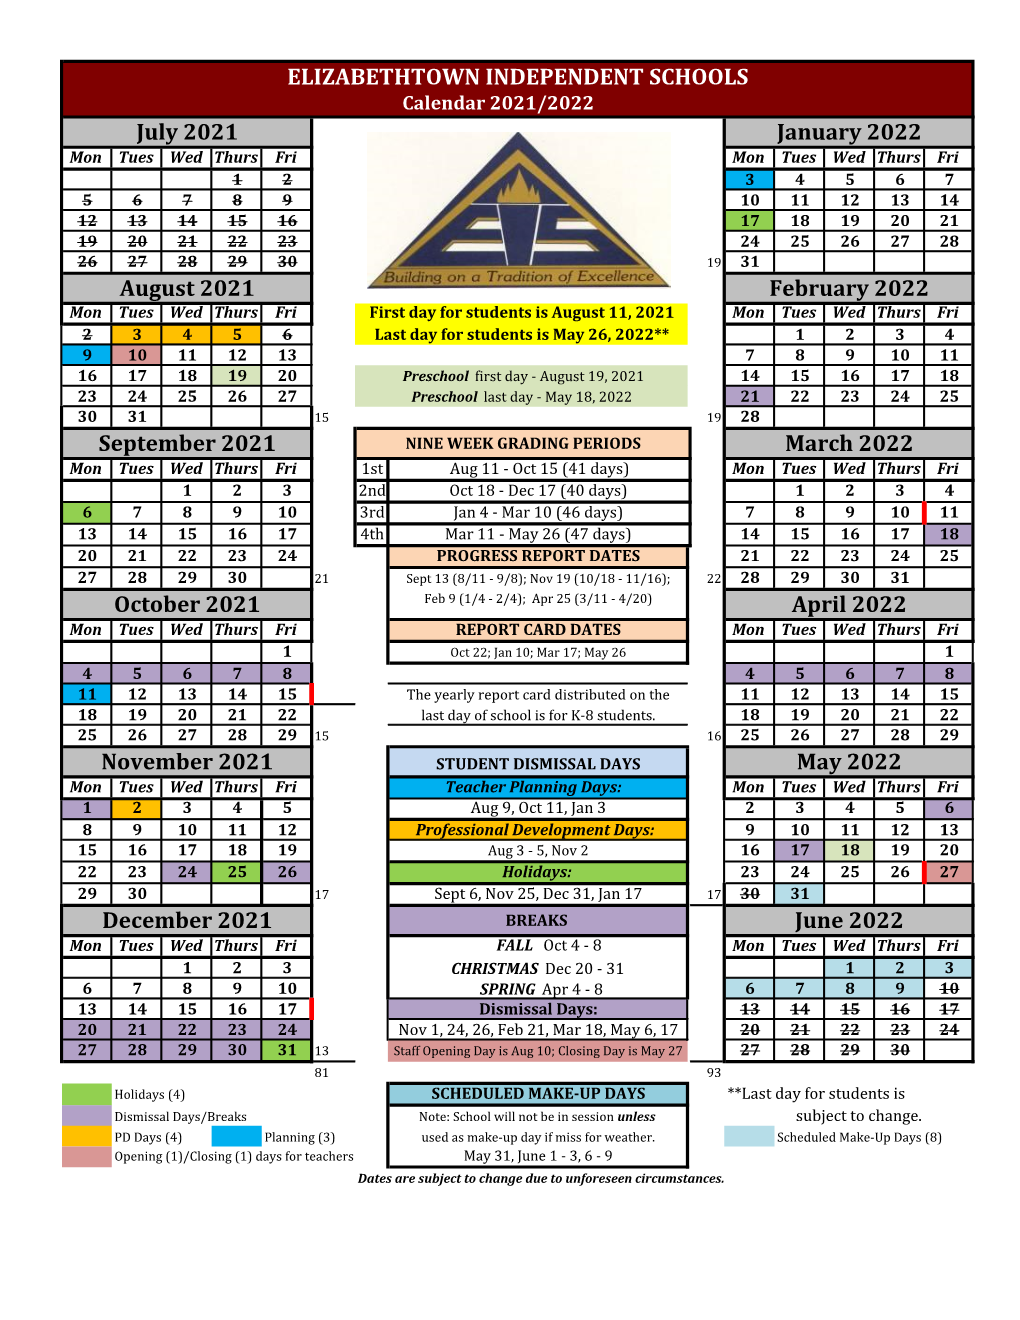 2021/2022 Calendar